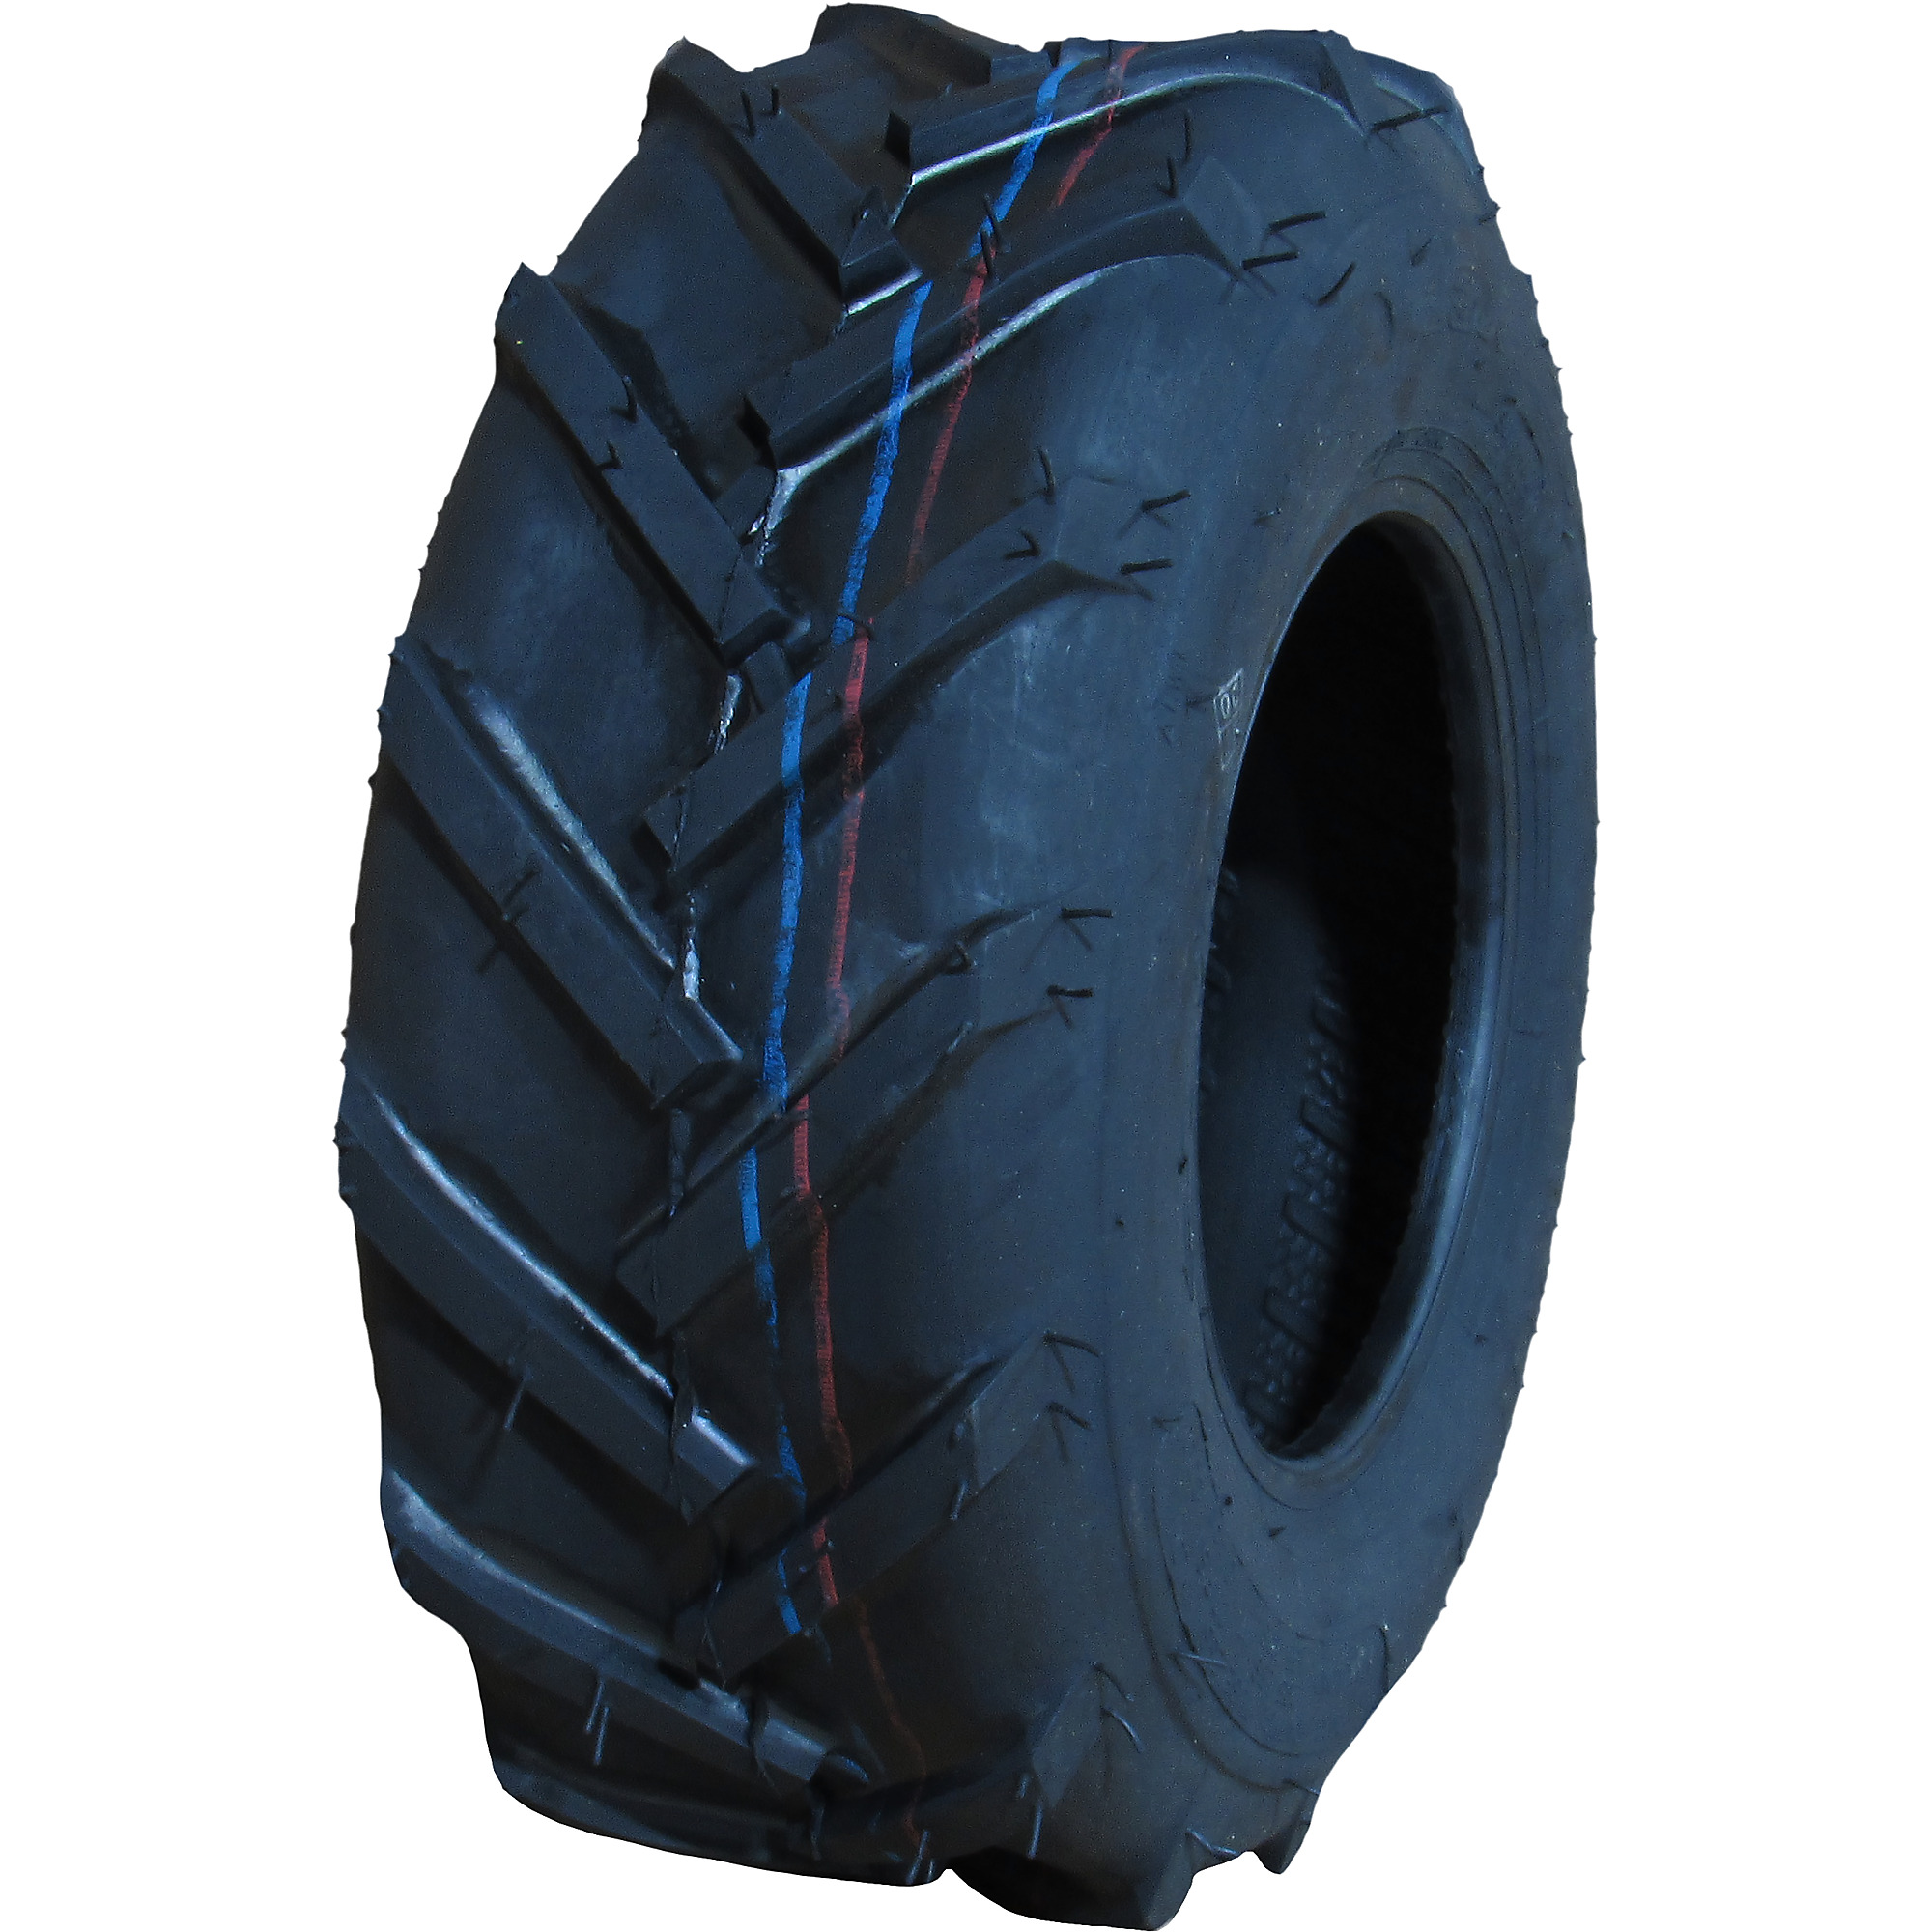 HI-RUN, Lawn Garden Tire, Super Lug, Tire Size 13X5.00-6 Load Range Rating A, Model WD1053